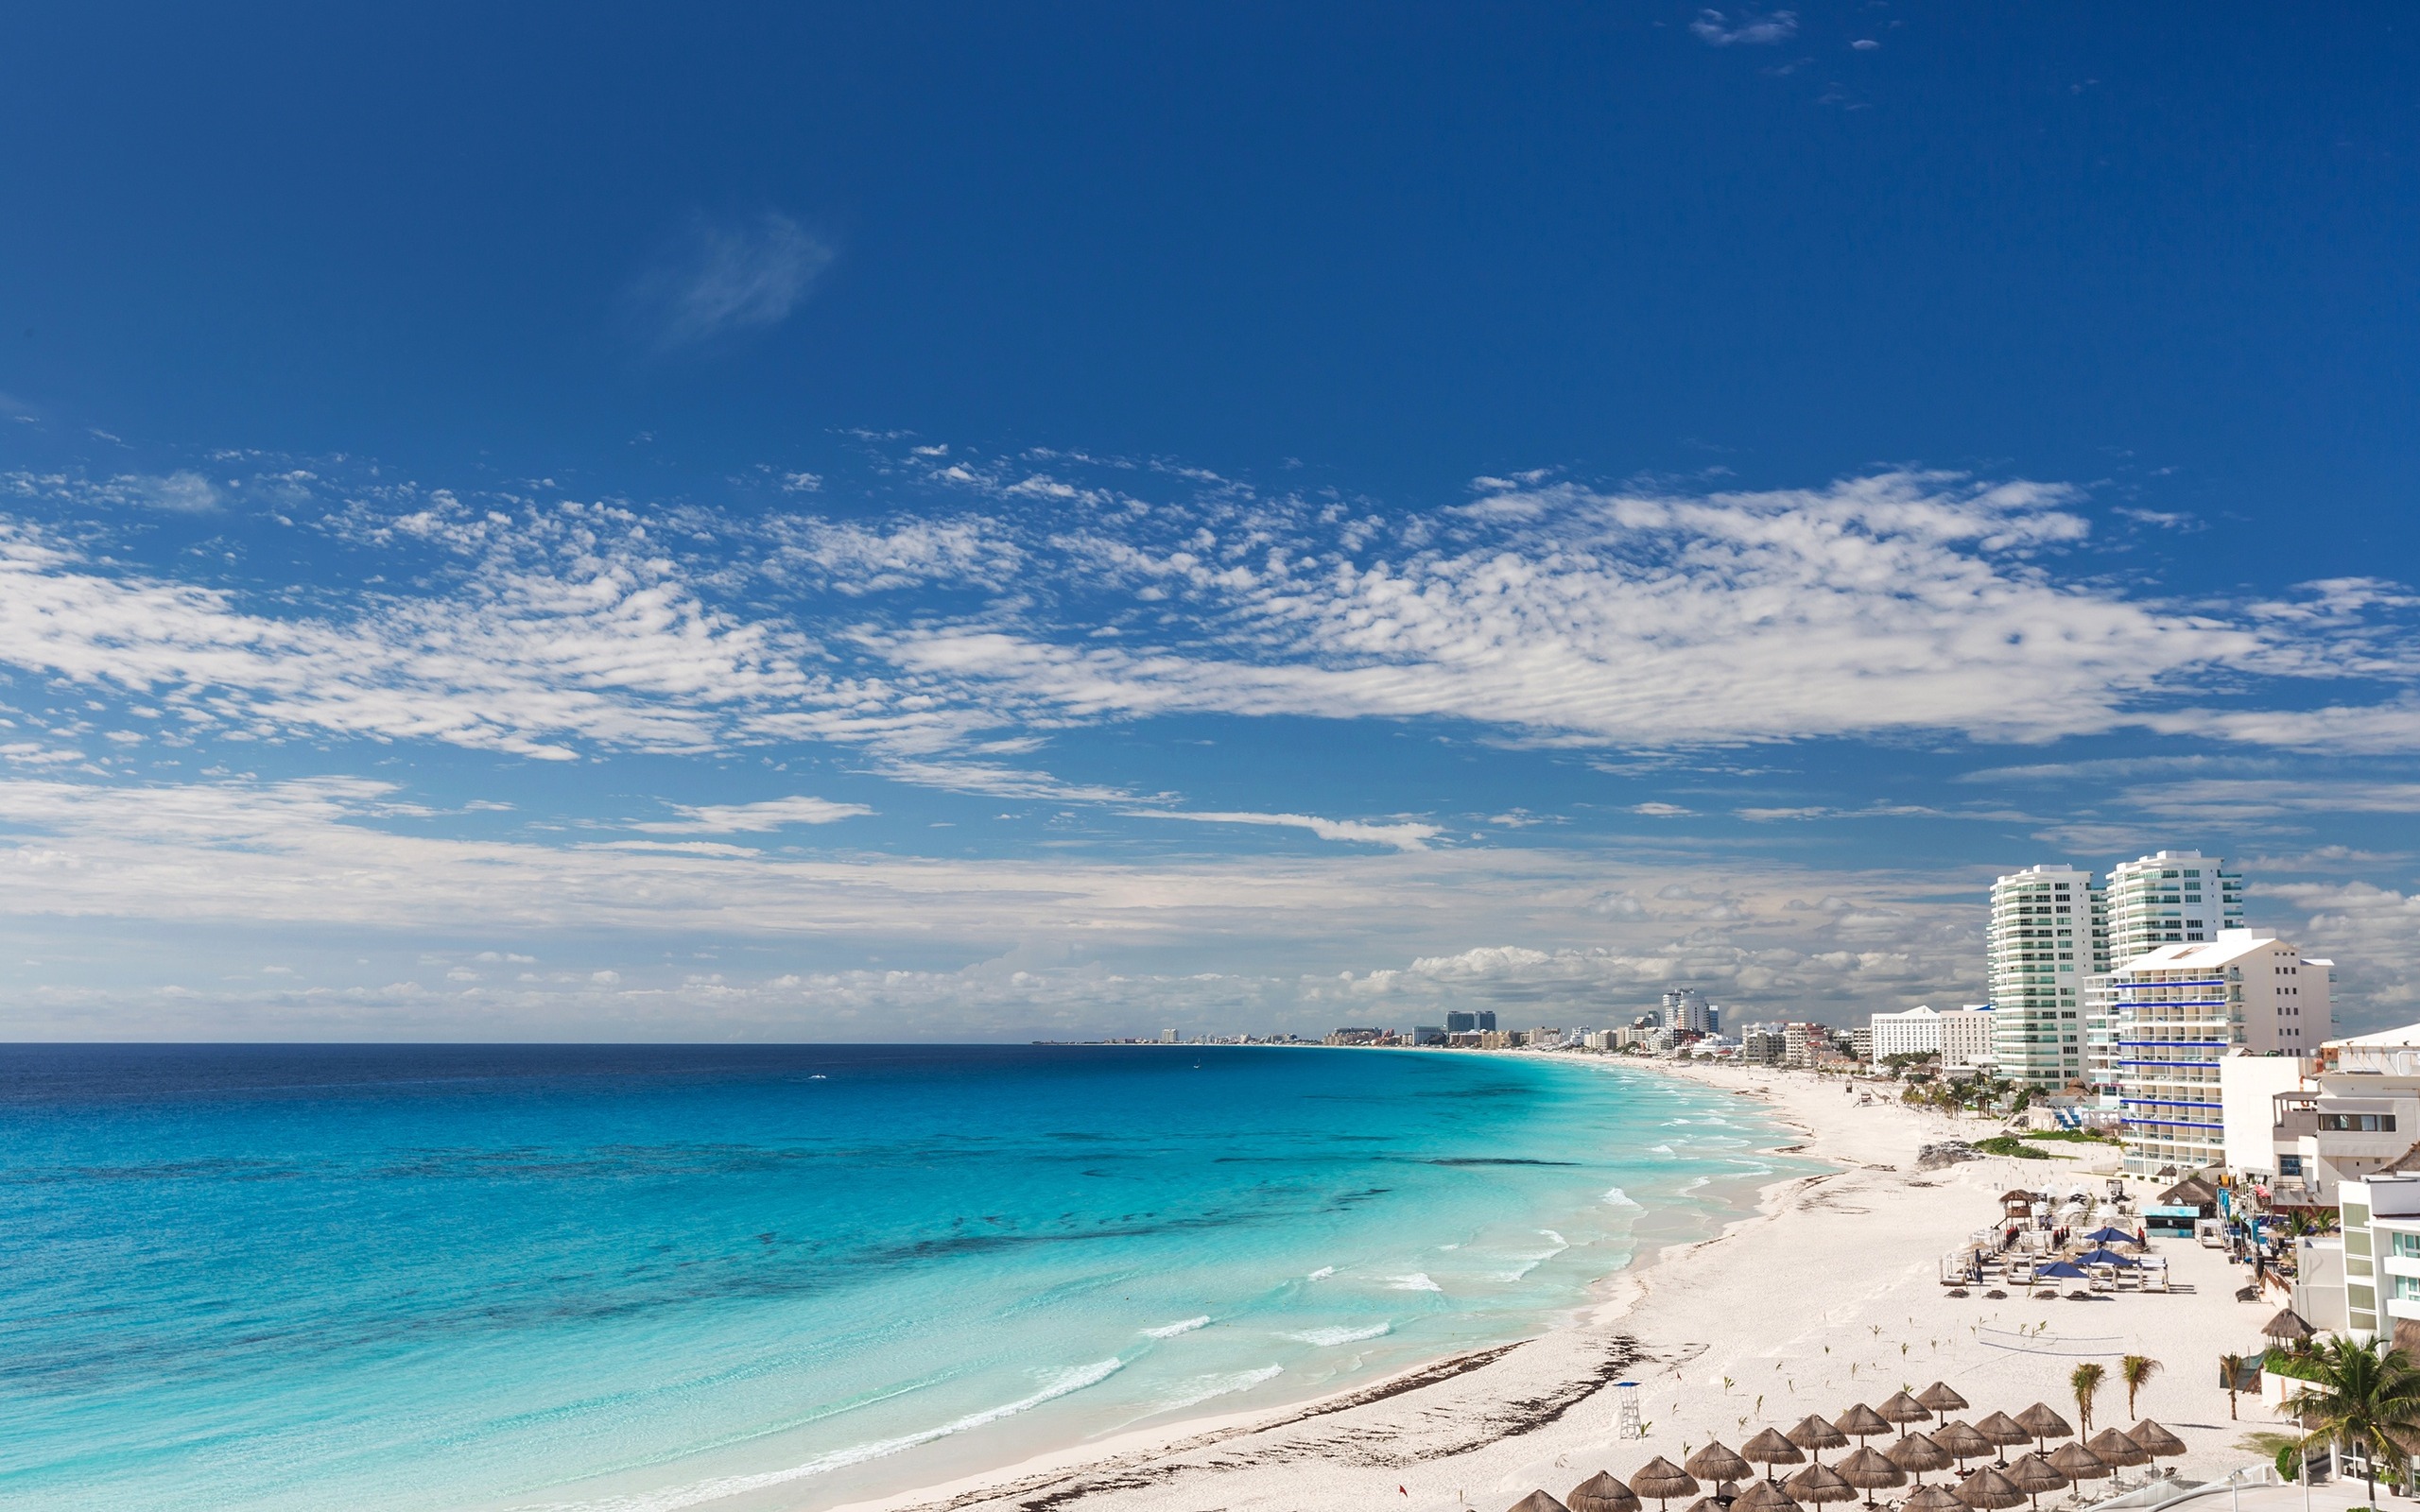 Descargar fondos de pantalla Cancún, playa, mar caribe, costa, resort,  México, Península de Yucatán, Quintana Roo monitor con una resolución  2560x1600. Imagenes de escritorio